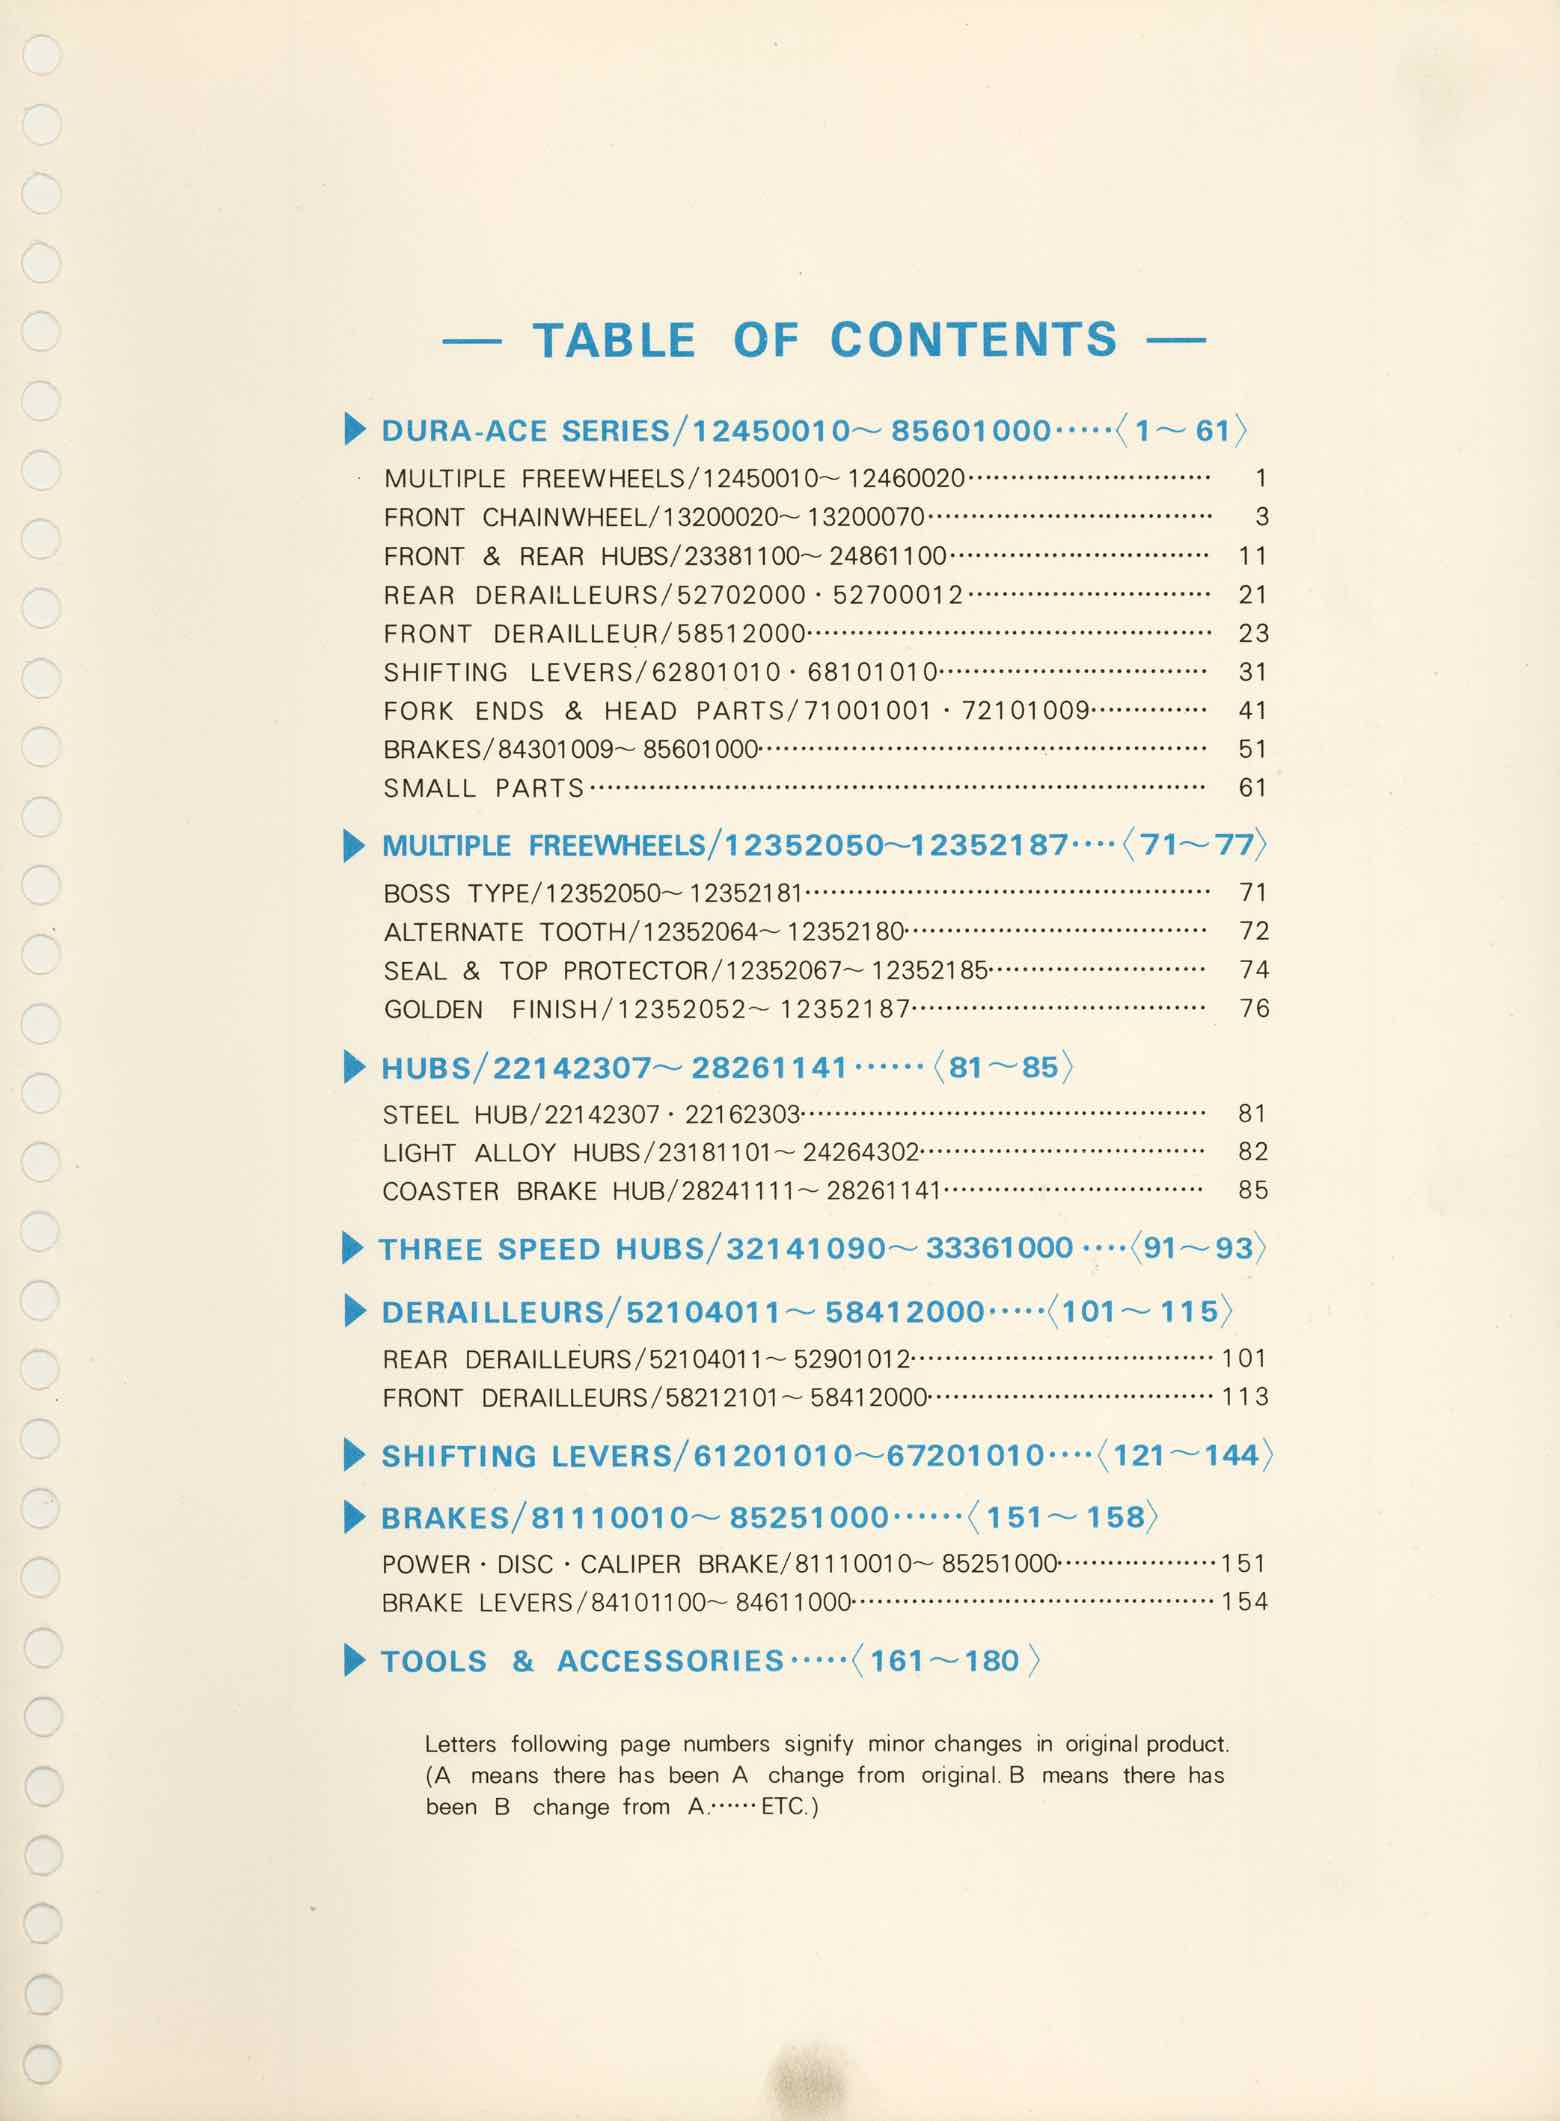 Shimano Bicycle Parts Catalog - 1973 table of contents main image